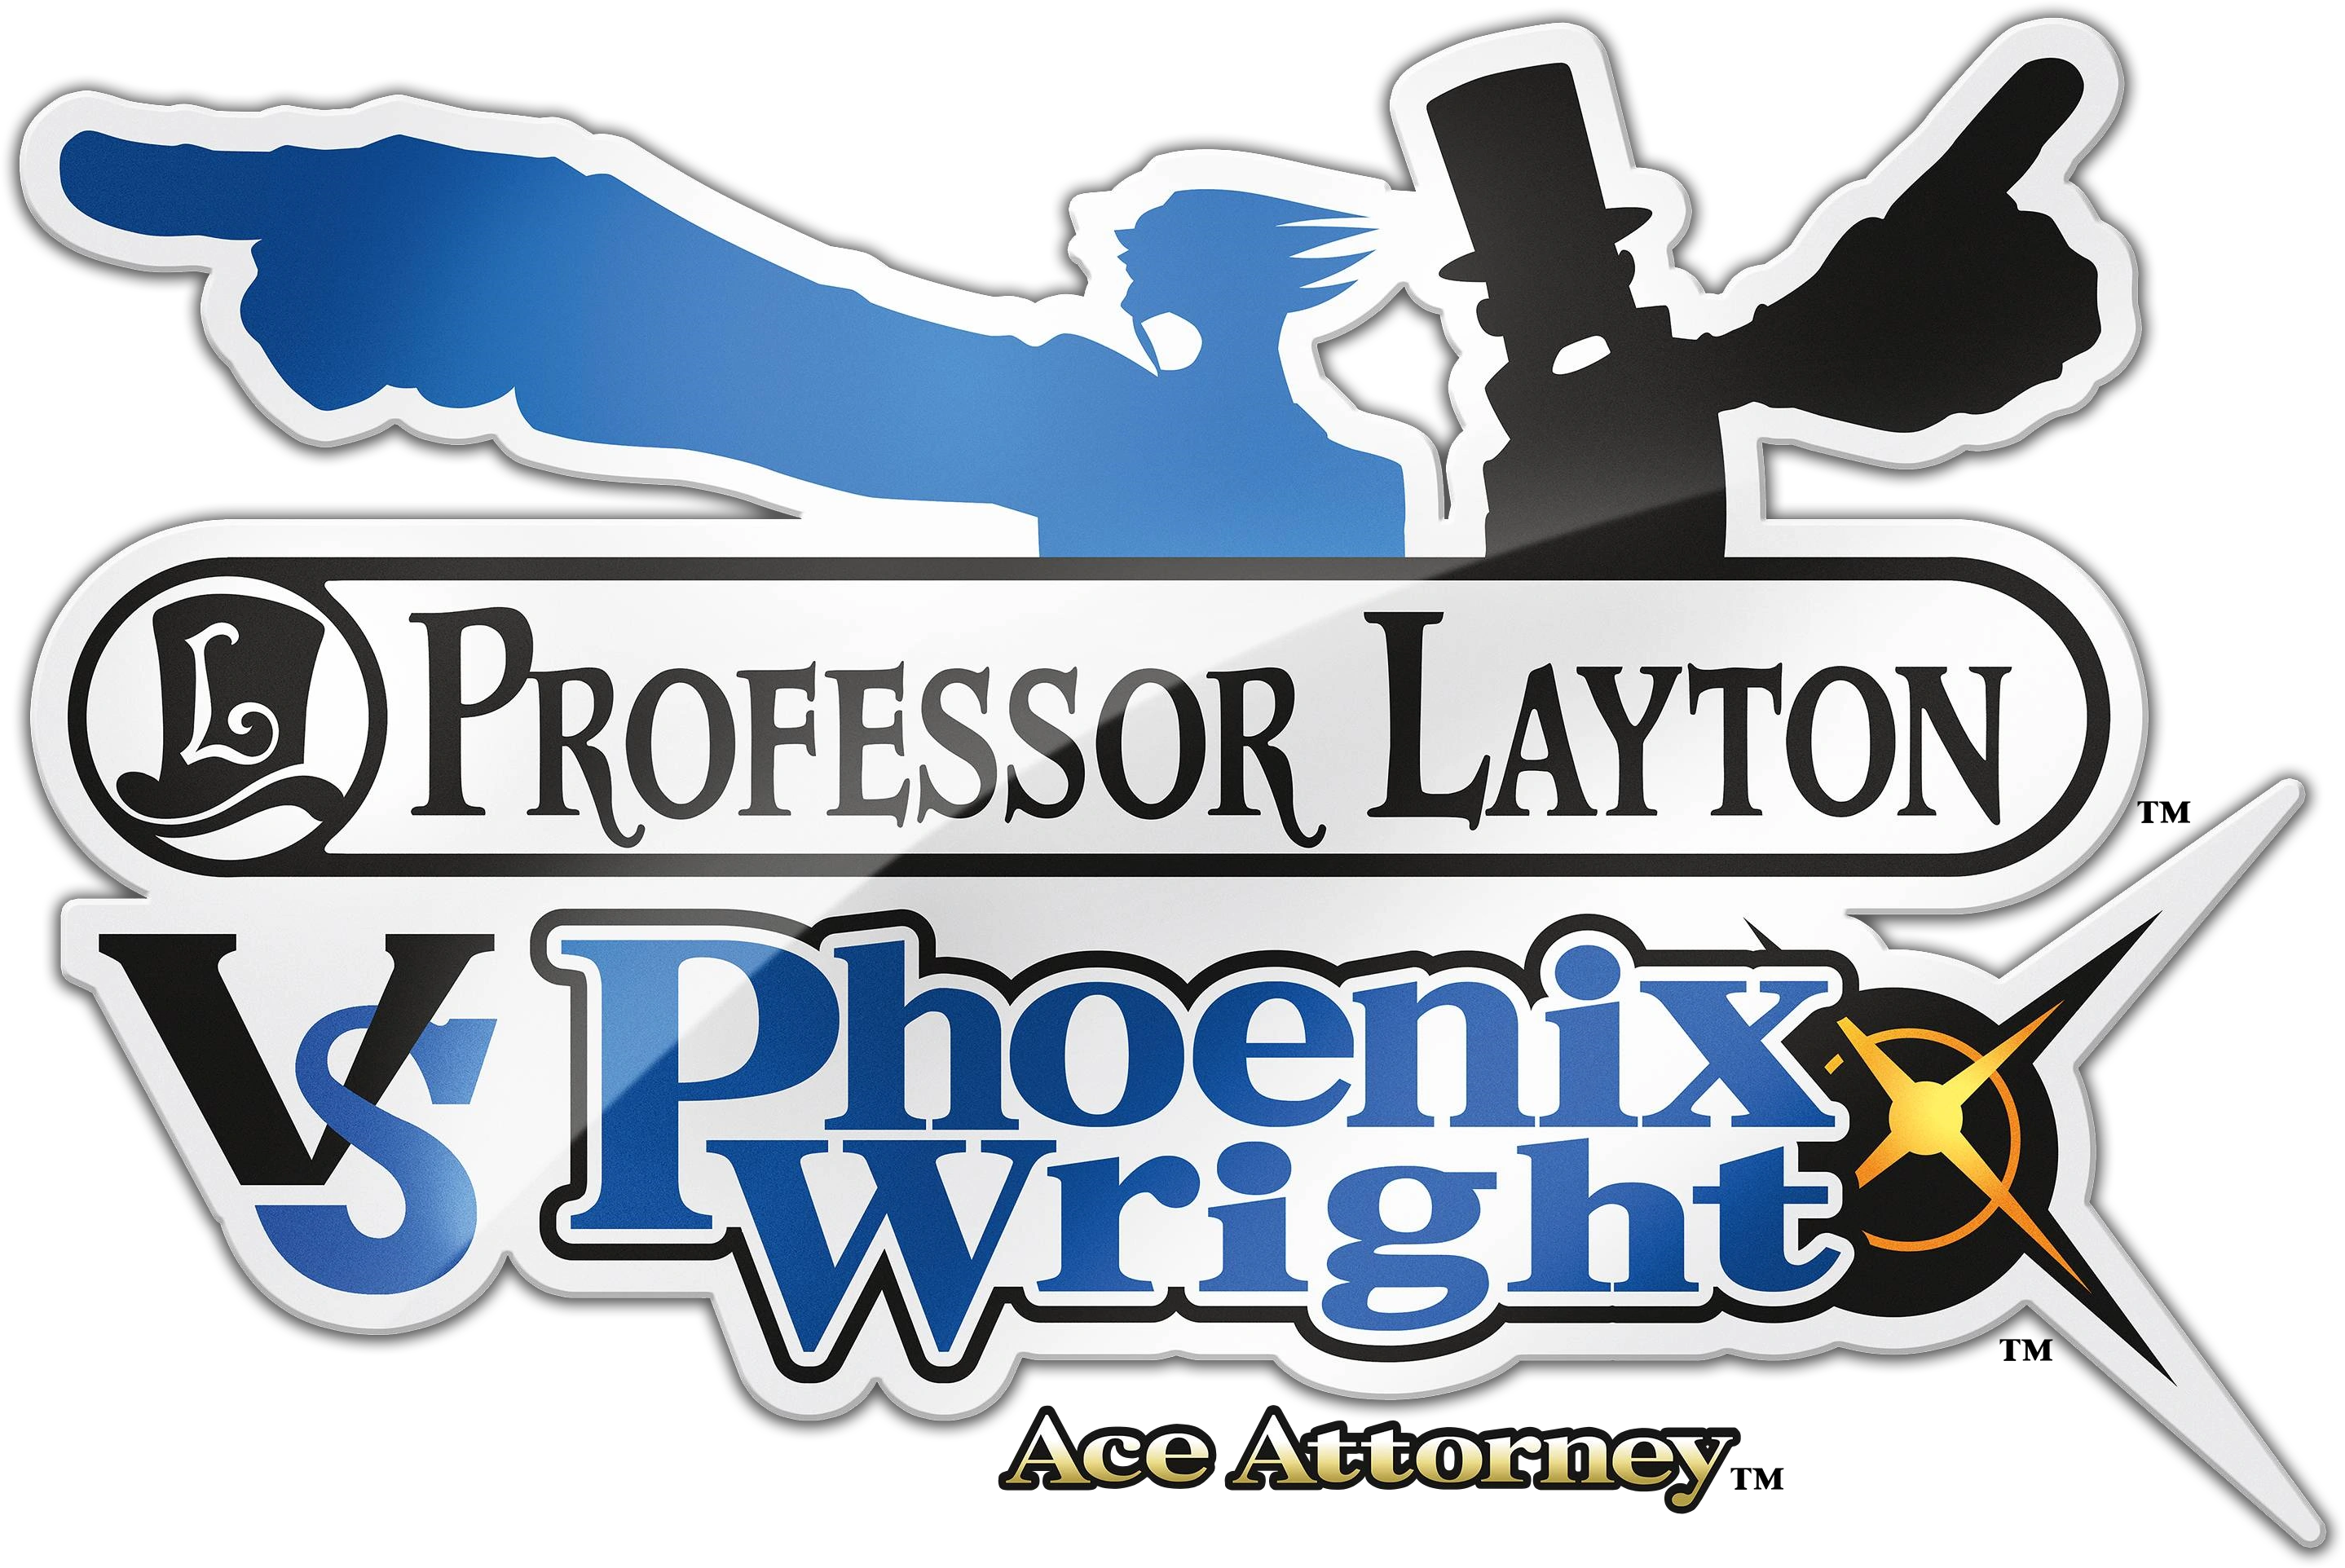 Main Characters Art - Professor Layton vs. Phoenix Wright: Ace